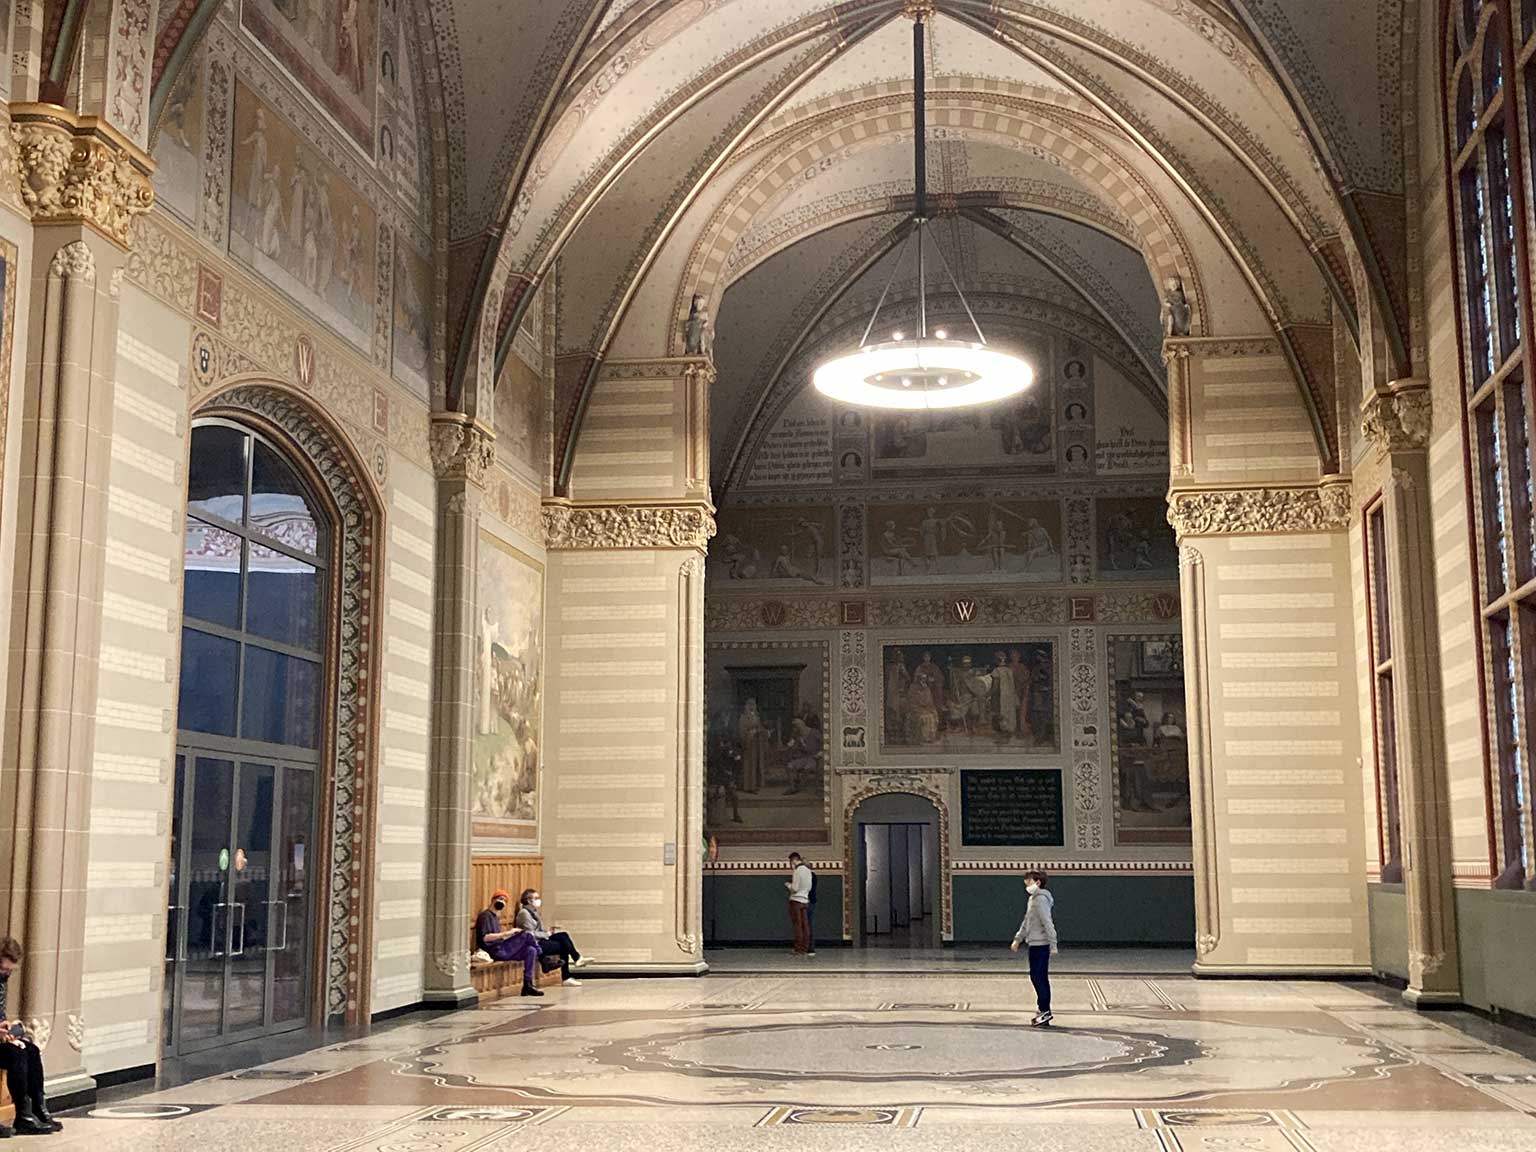 View of the interior hall near the Klokkentoren in the Rijksmuseum, Amsterdam